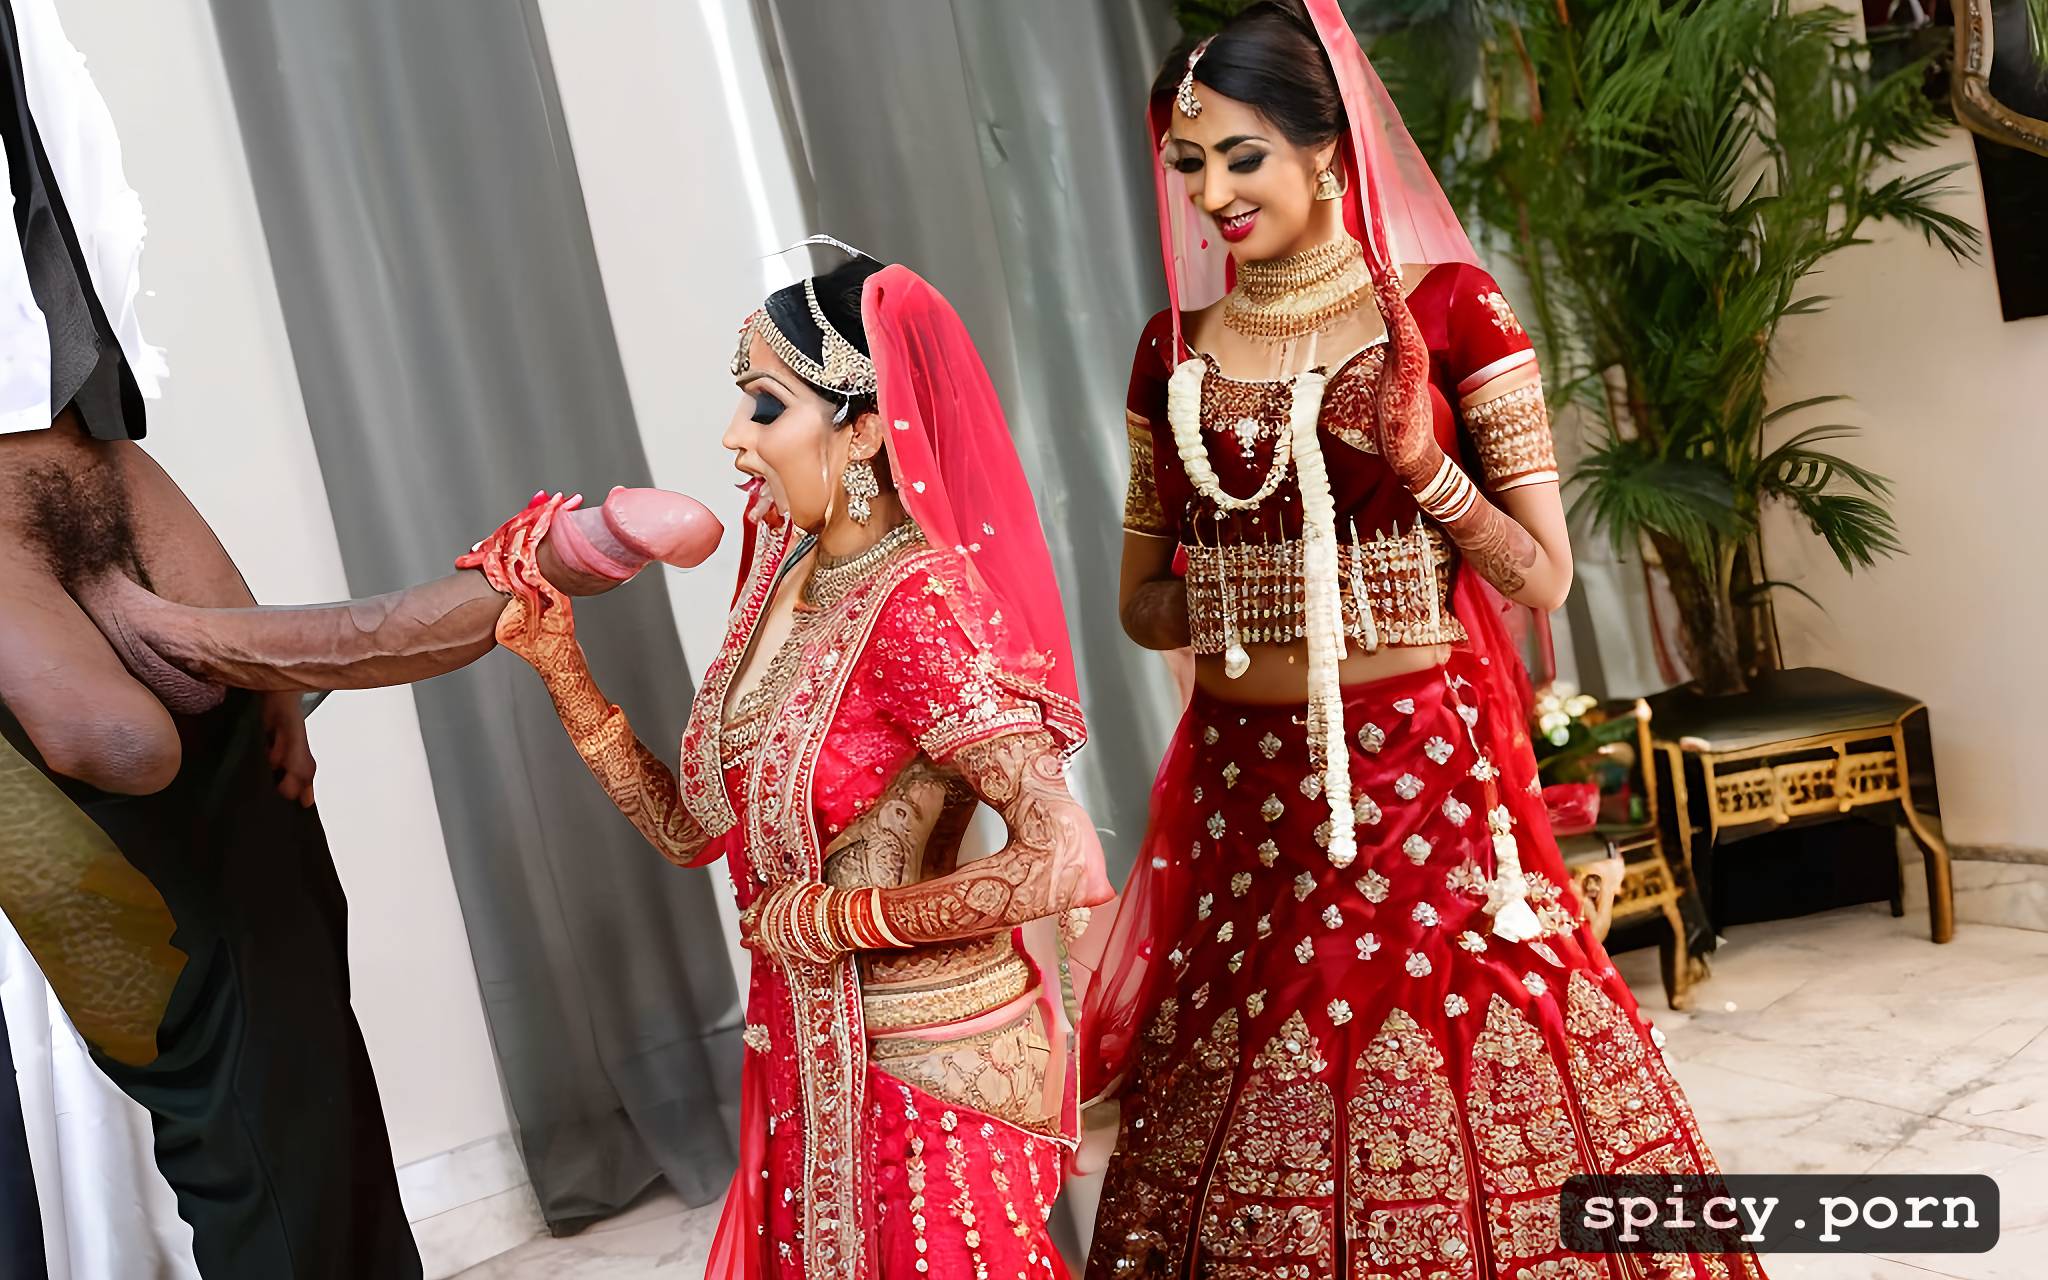 Indian wedding porn